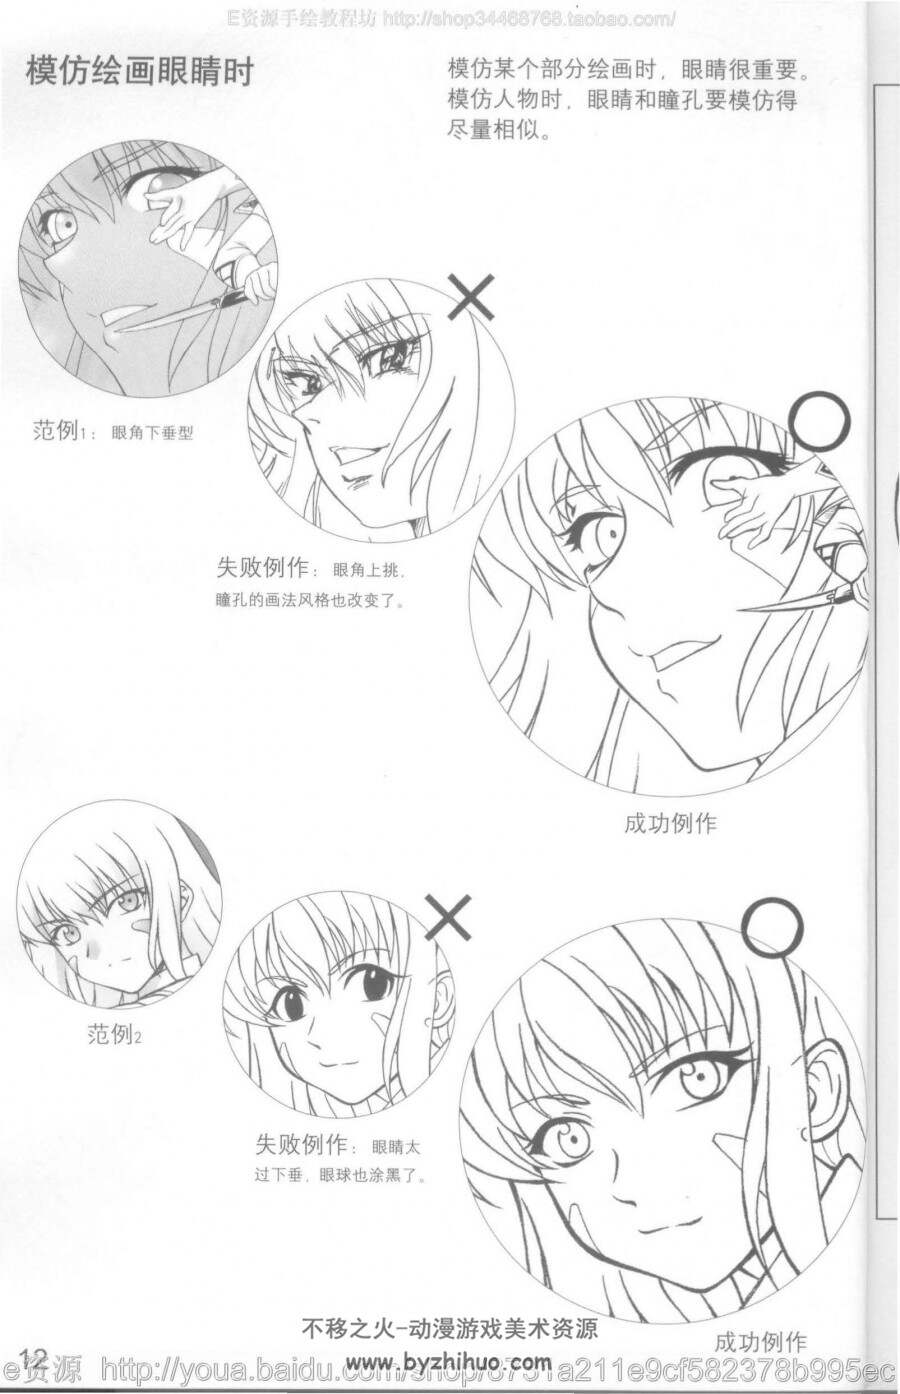 漫画技法终极向导 1-6册 How to Draw Manga Ultimate Manga Lessons